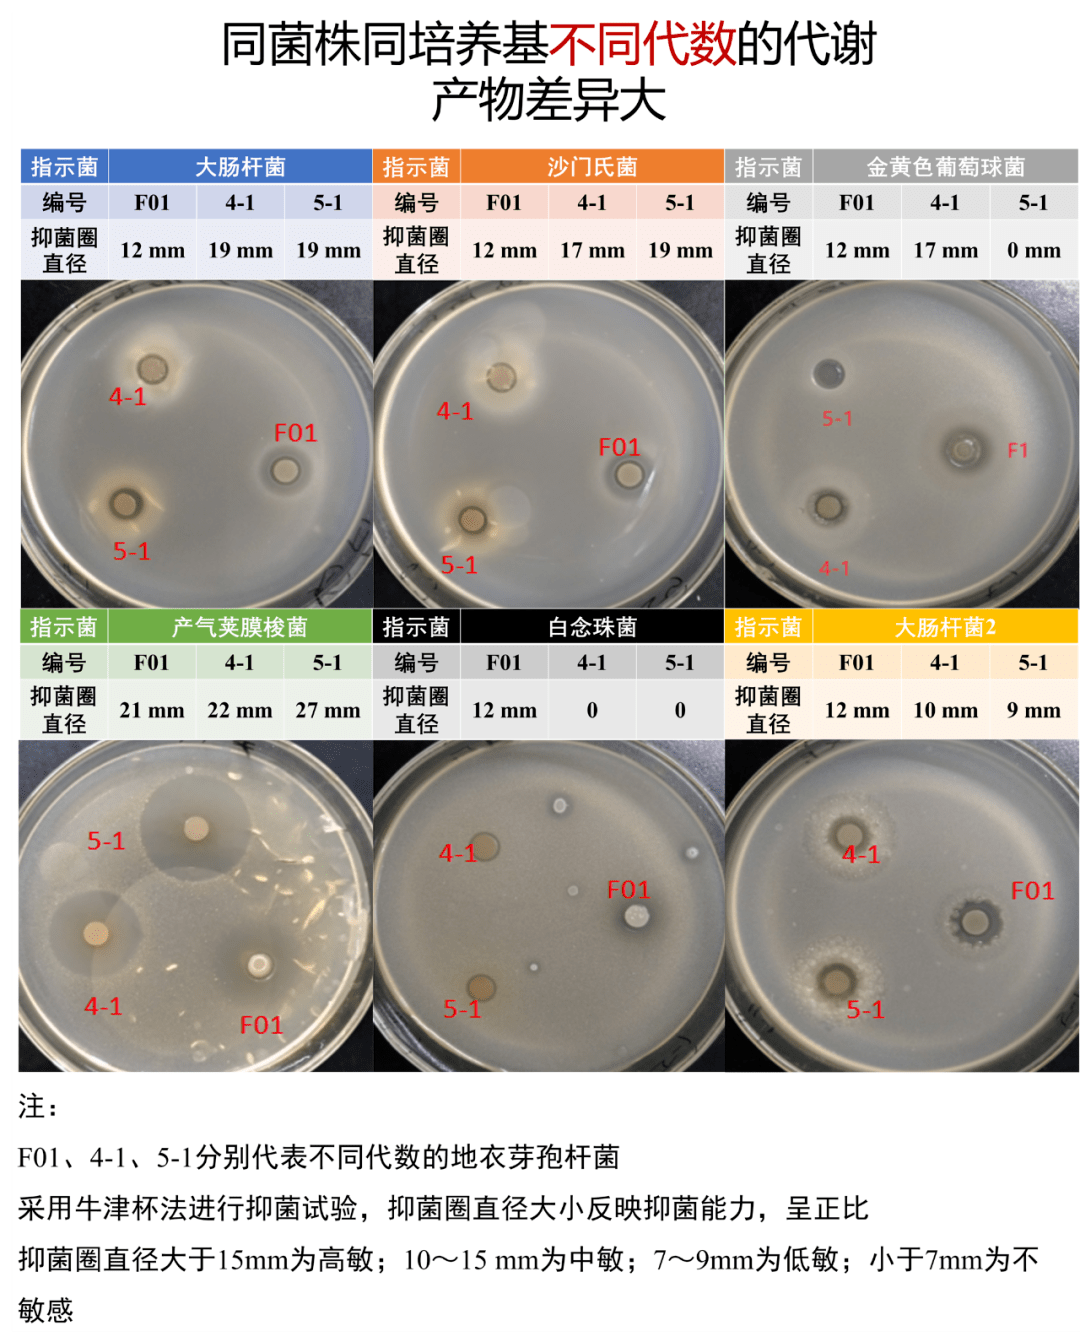 f01号的地衣芽孢杆菌对大肠杆菌的抑菌圈直径为12 mm,而4